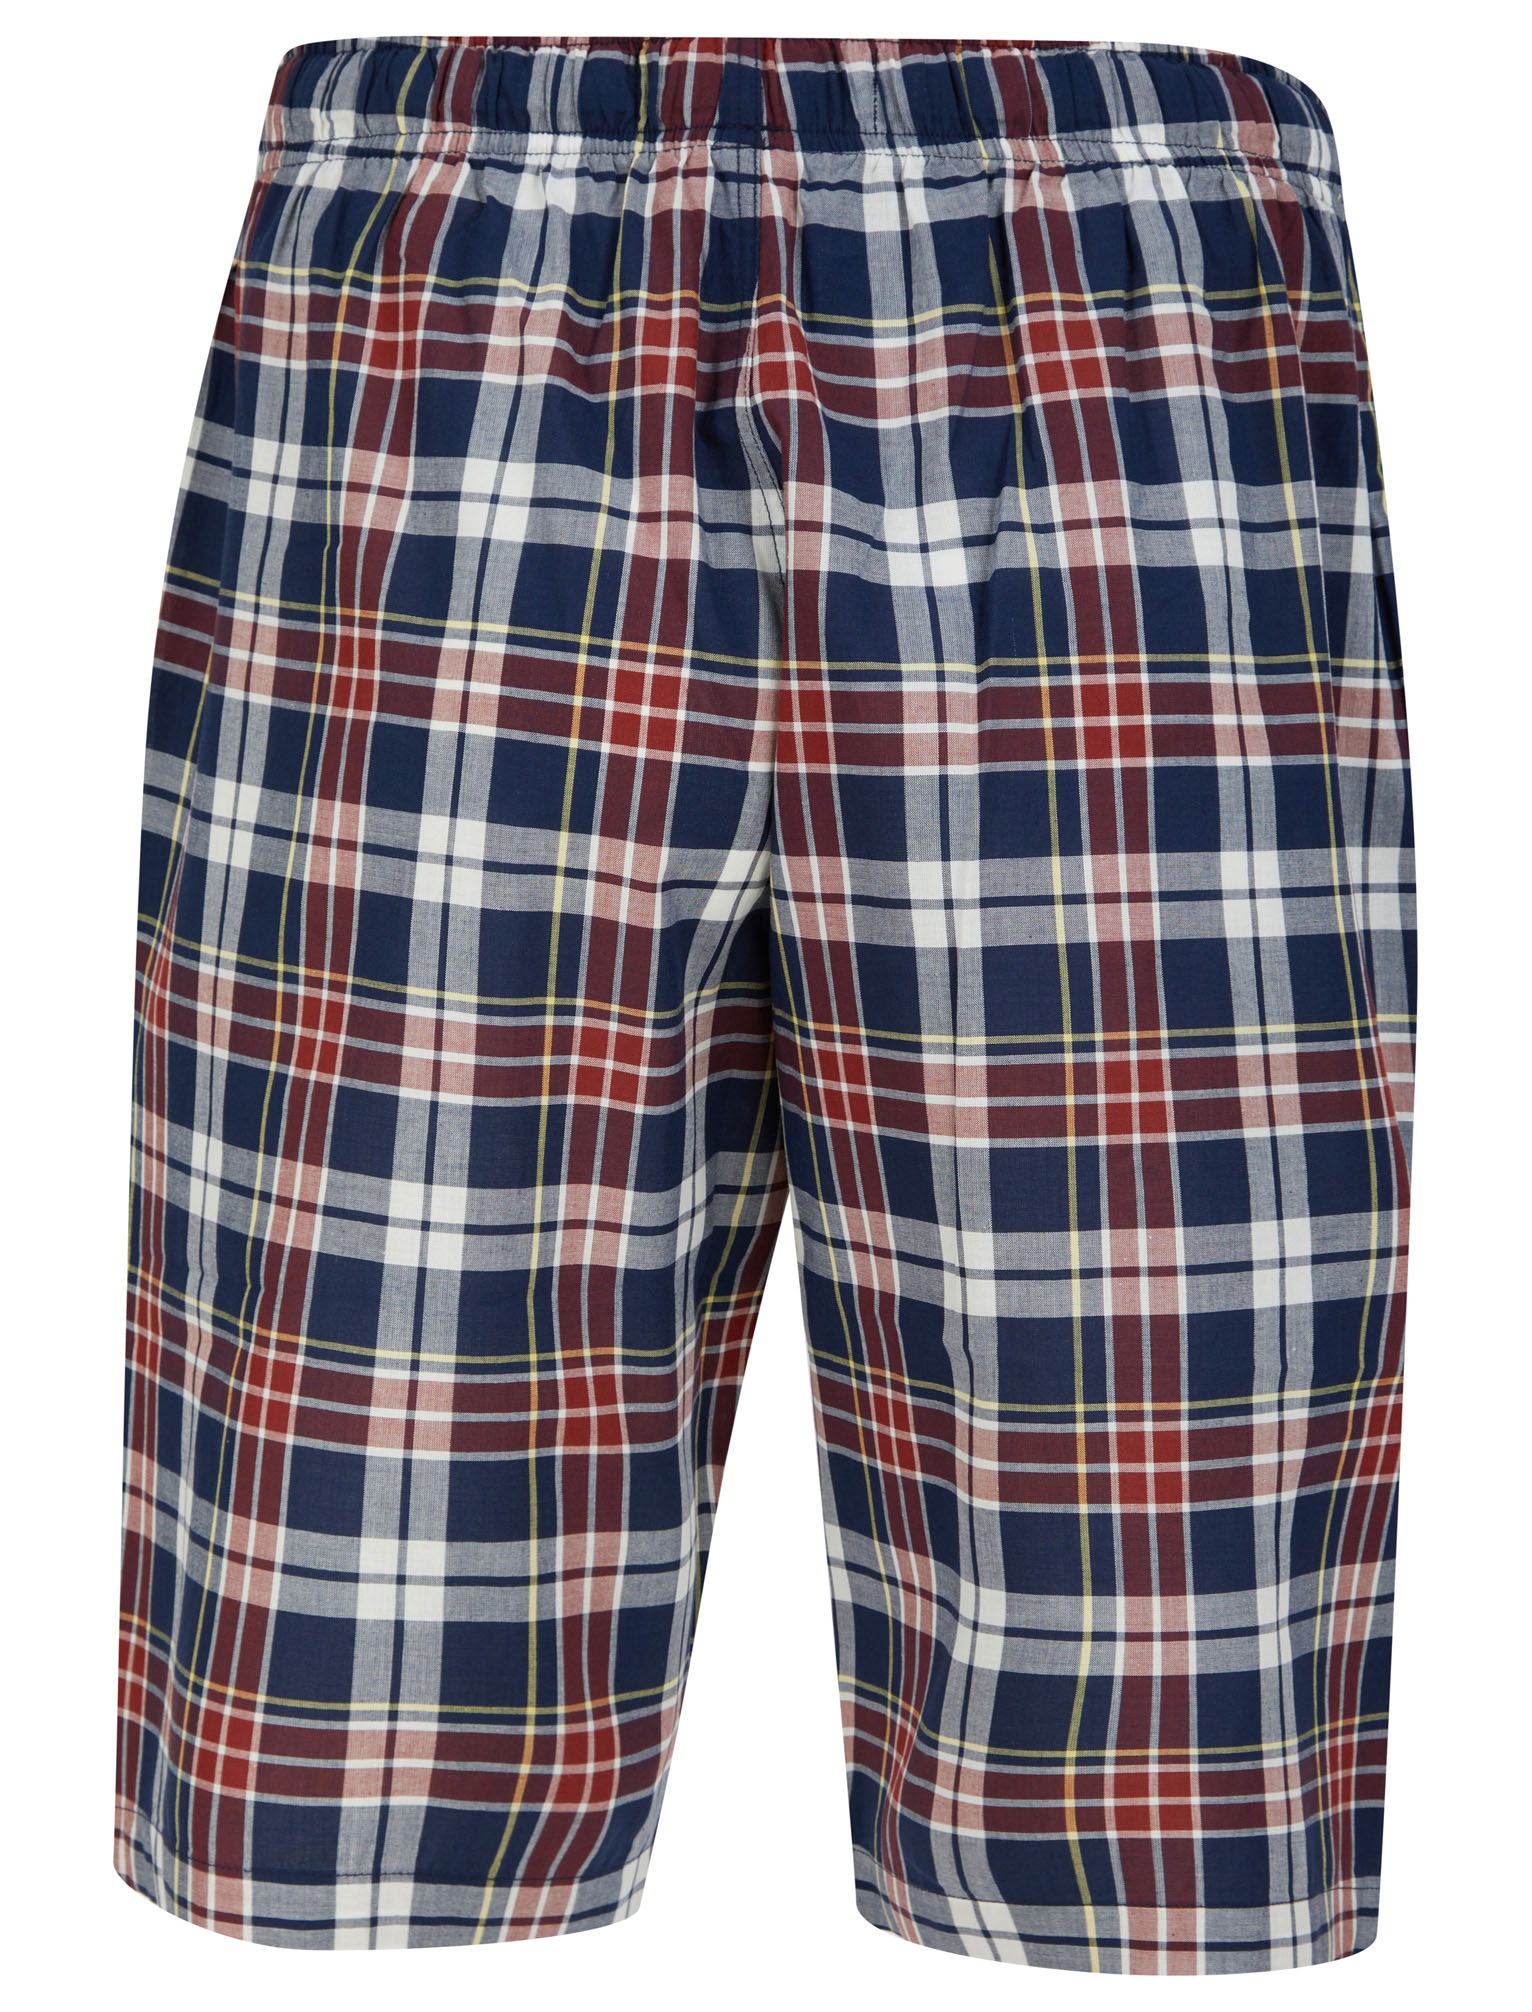 Tokyo Laundry Pyjama Shorts Men's Checked Cotton Woven Lounge Nightwear ...